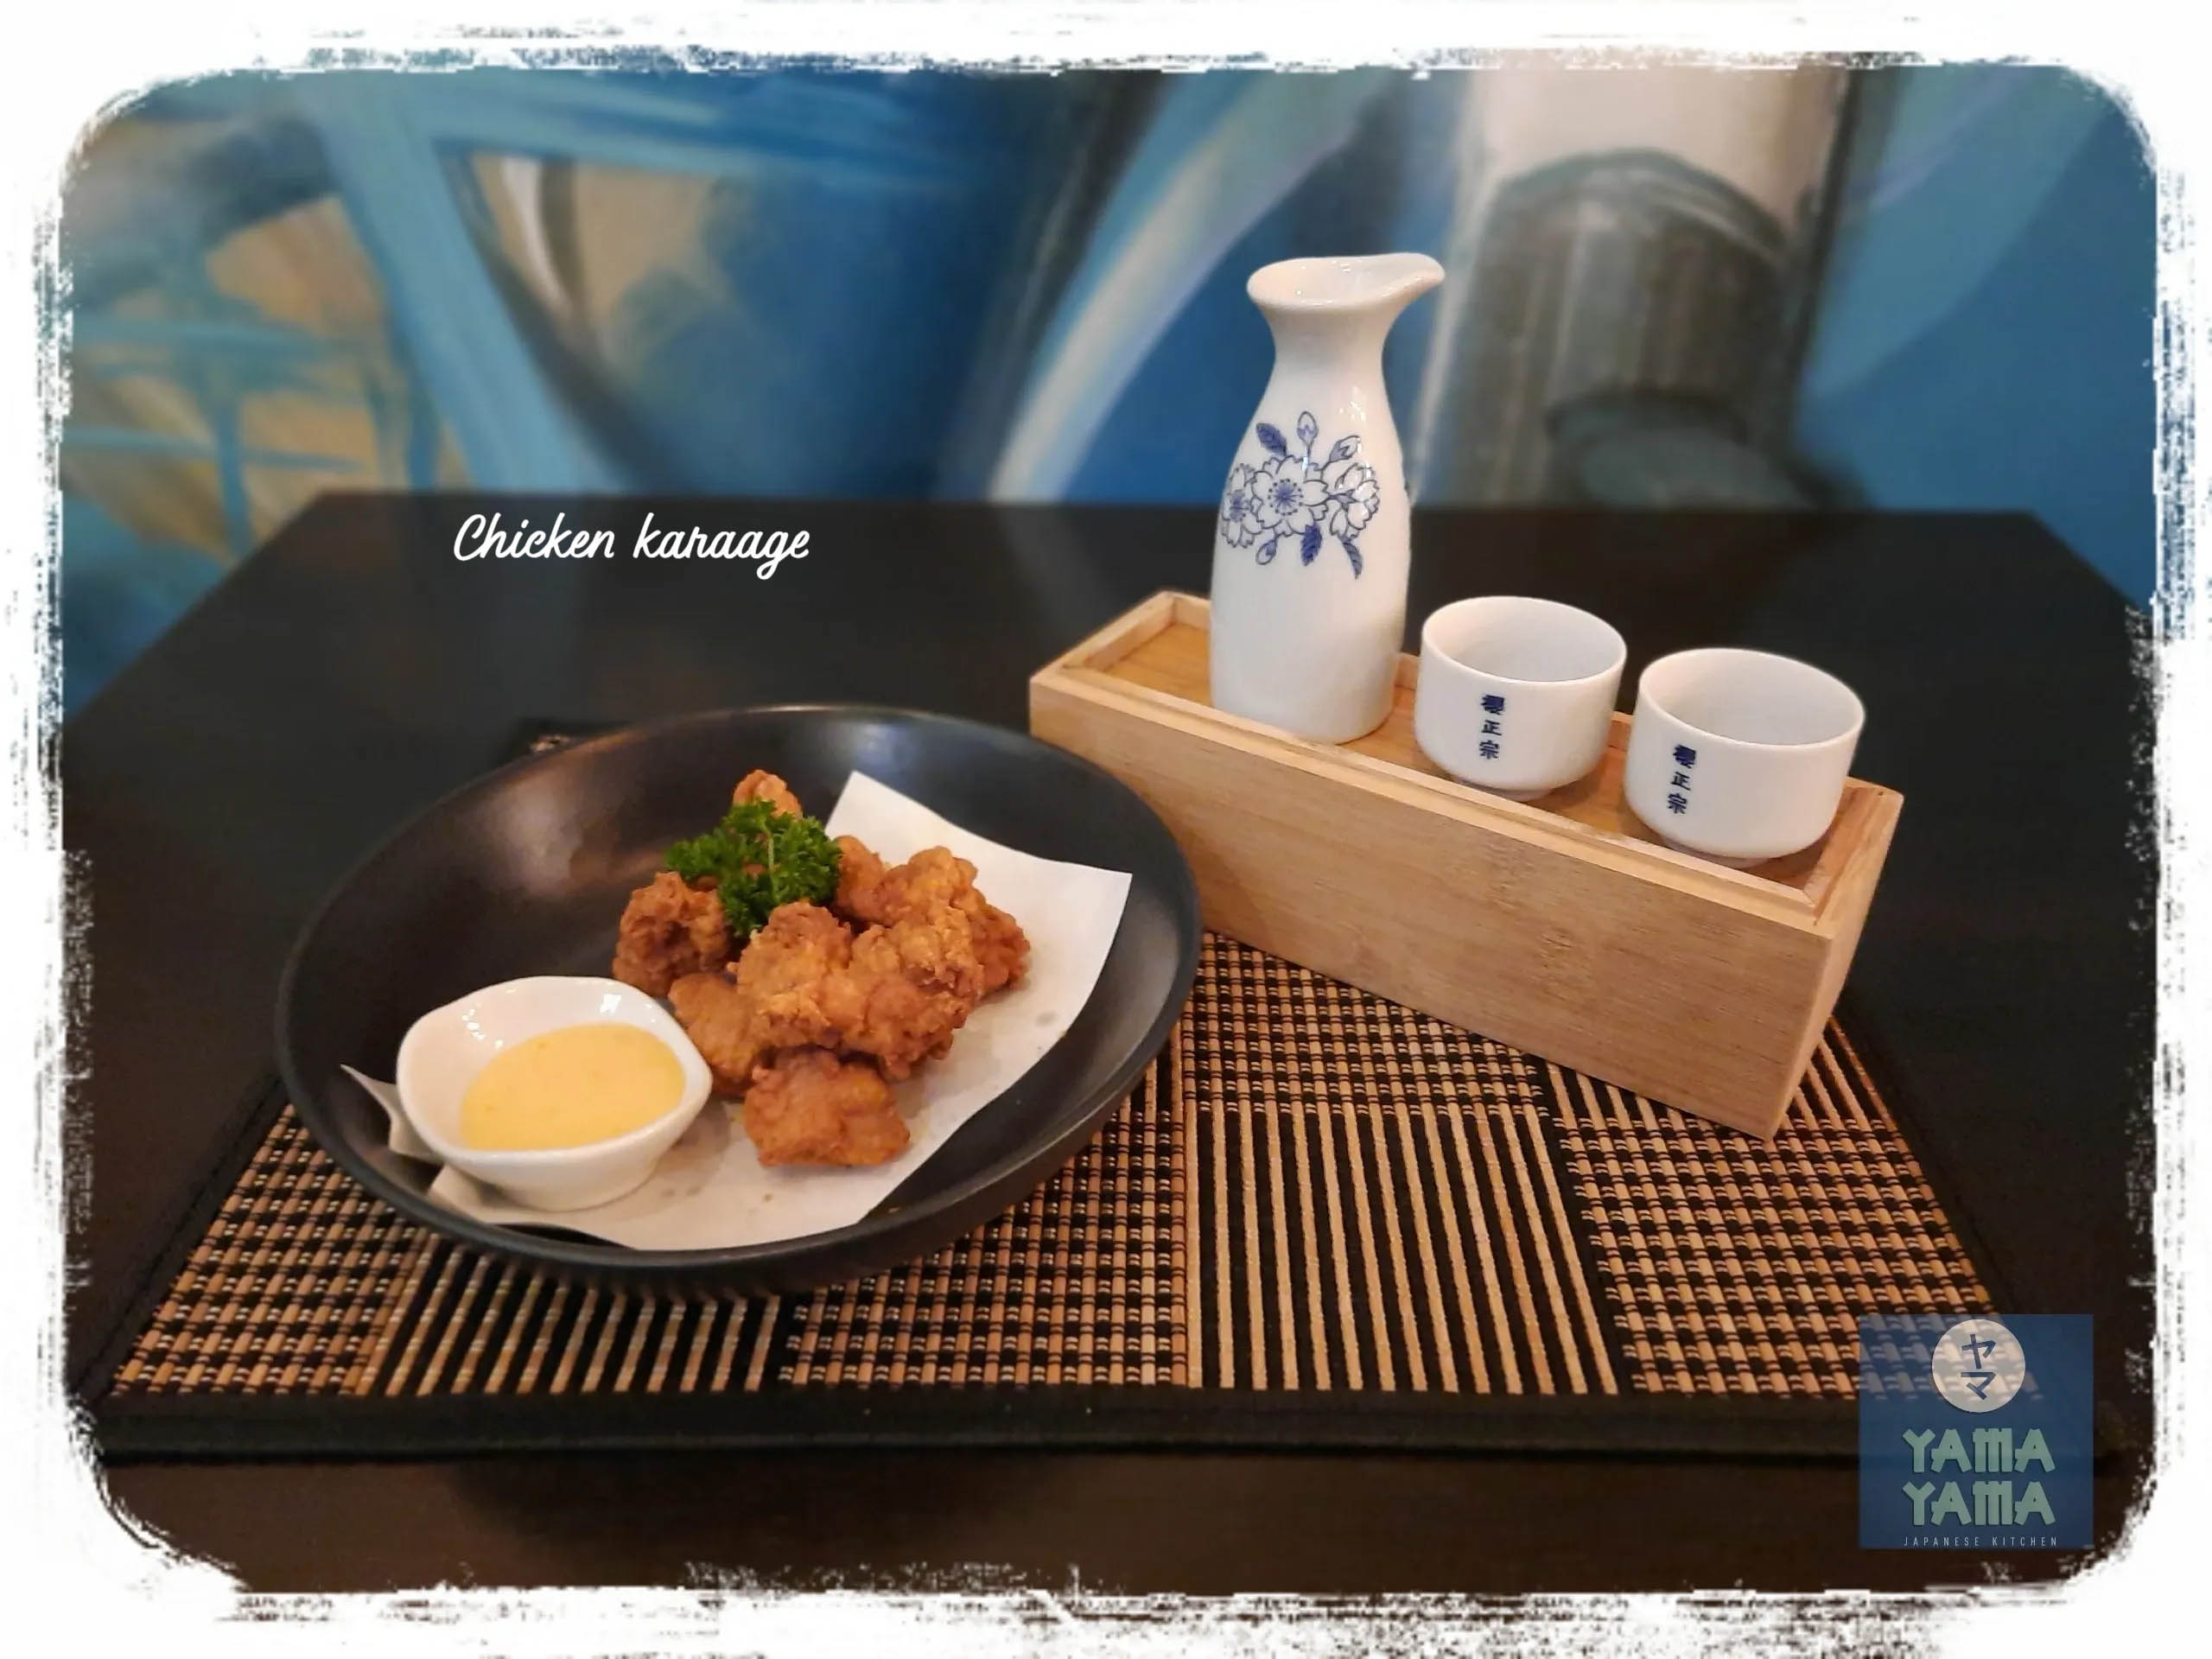 Photo of a Chicken karaage meal from Yama Yama